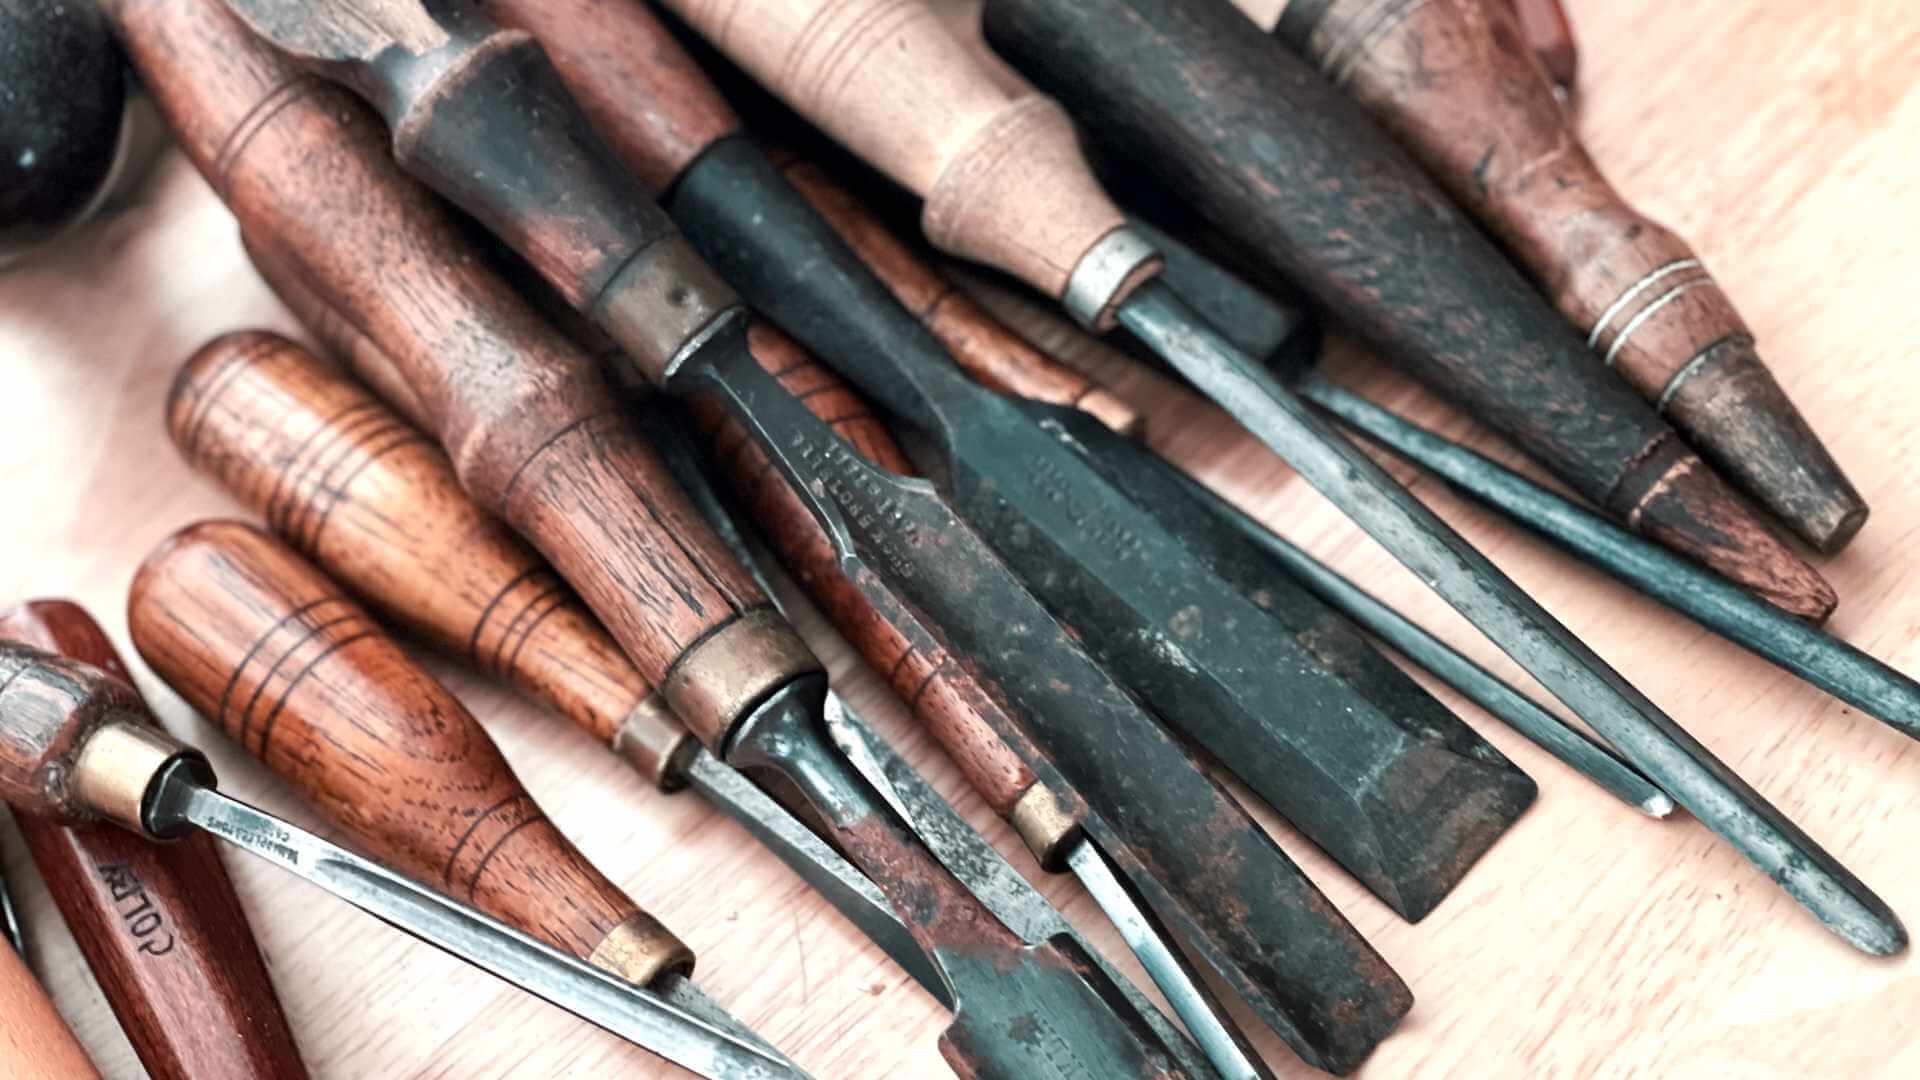 Sharpening carving tools